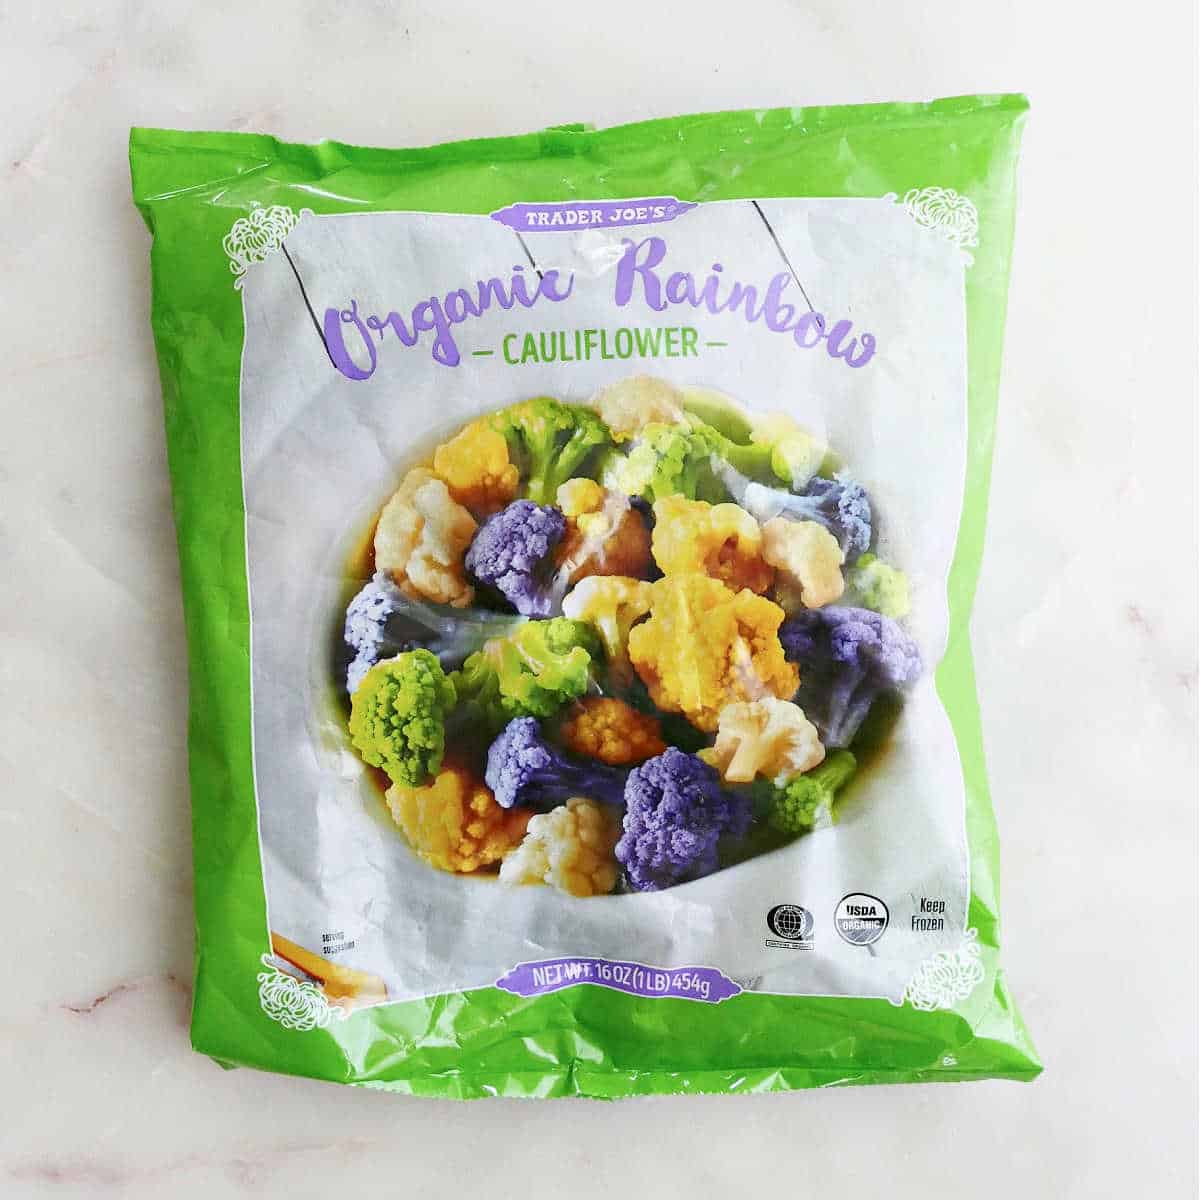 package of Trader joe's organic rainbow cauliflower on a counter